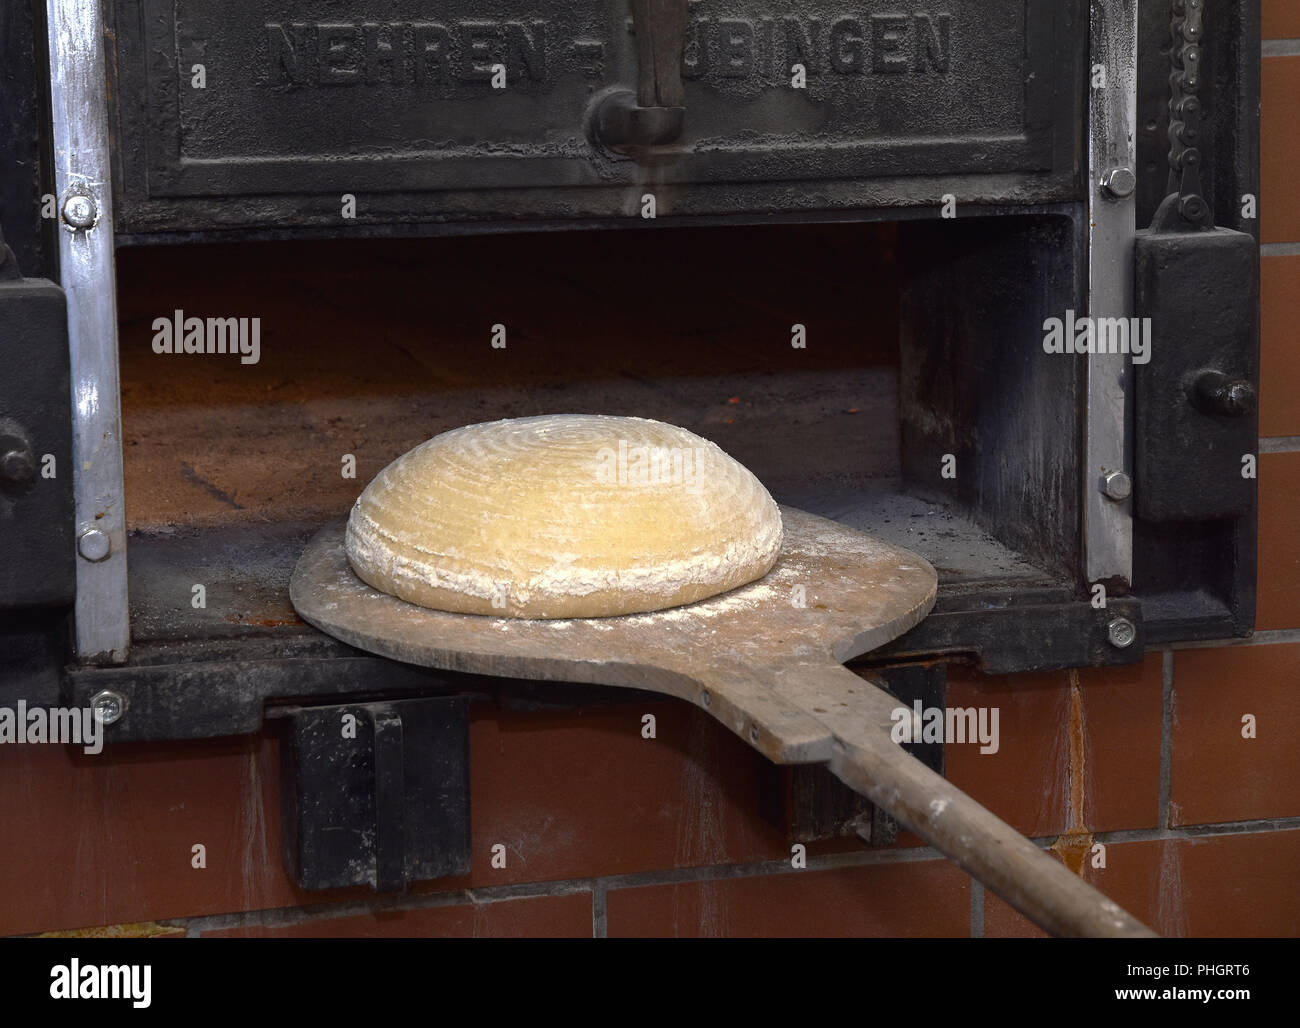 Masa de pan; hornear pan; pan artesano; woodstove; Foto de stock